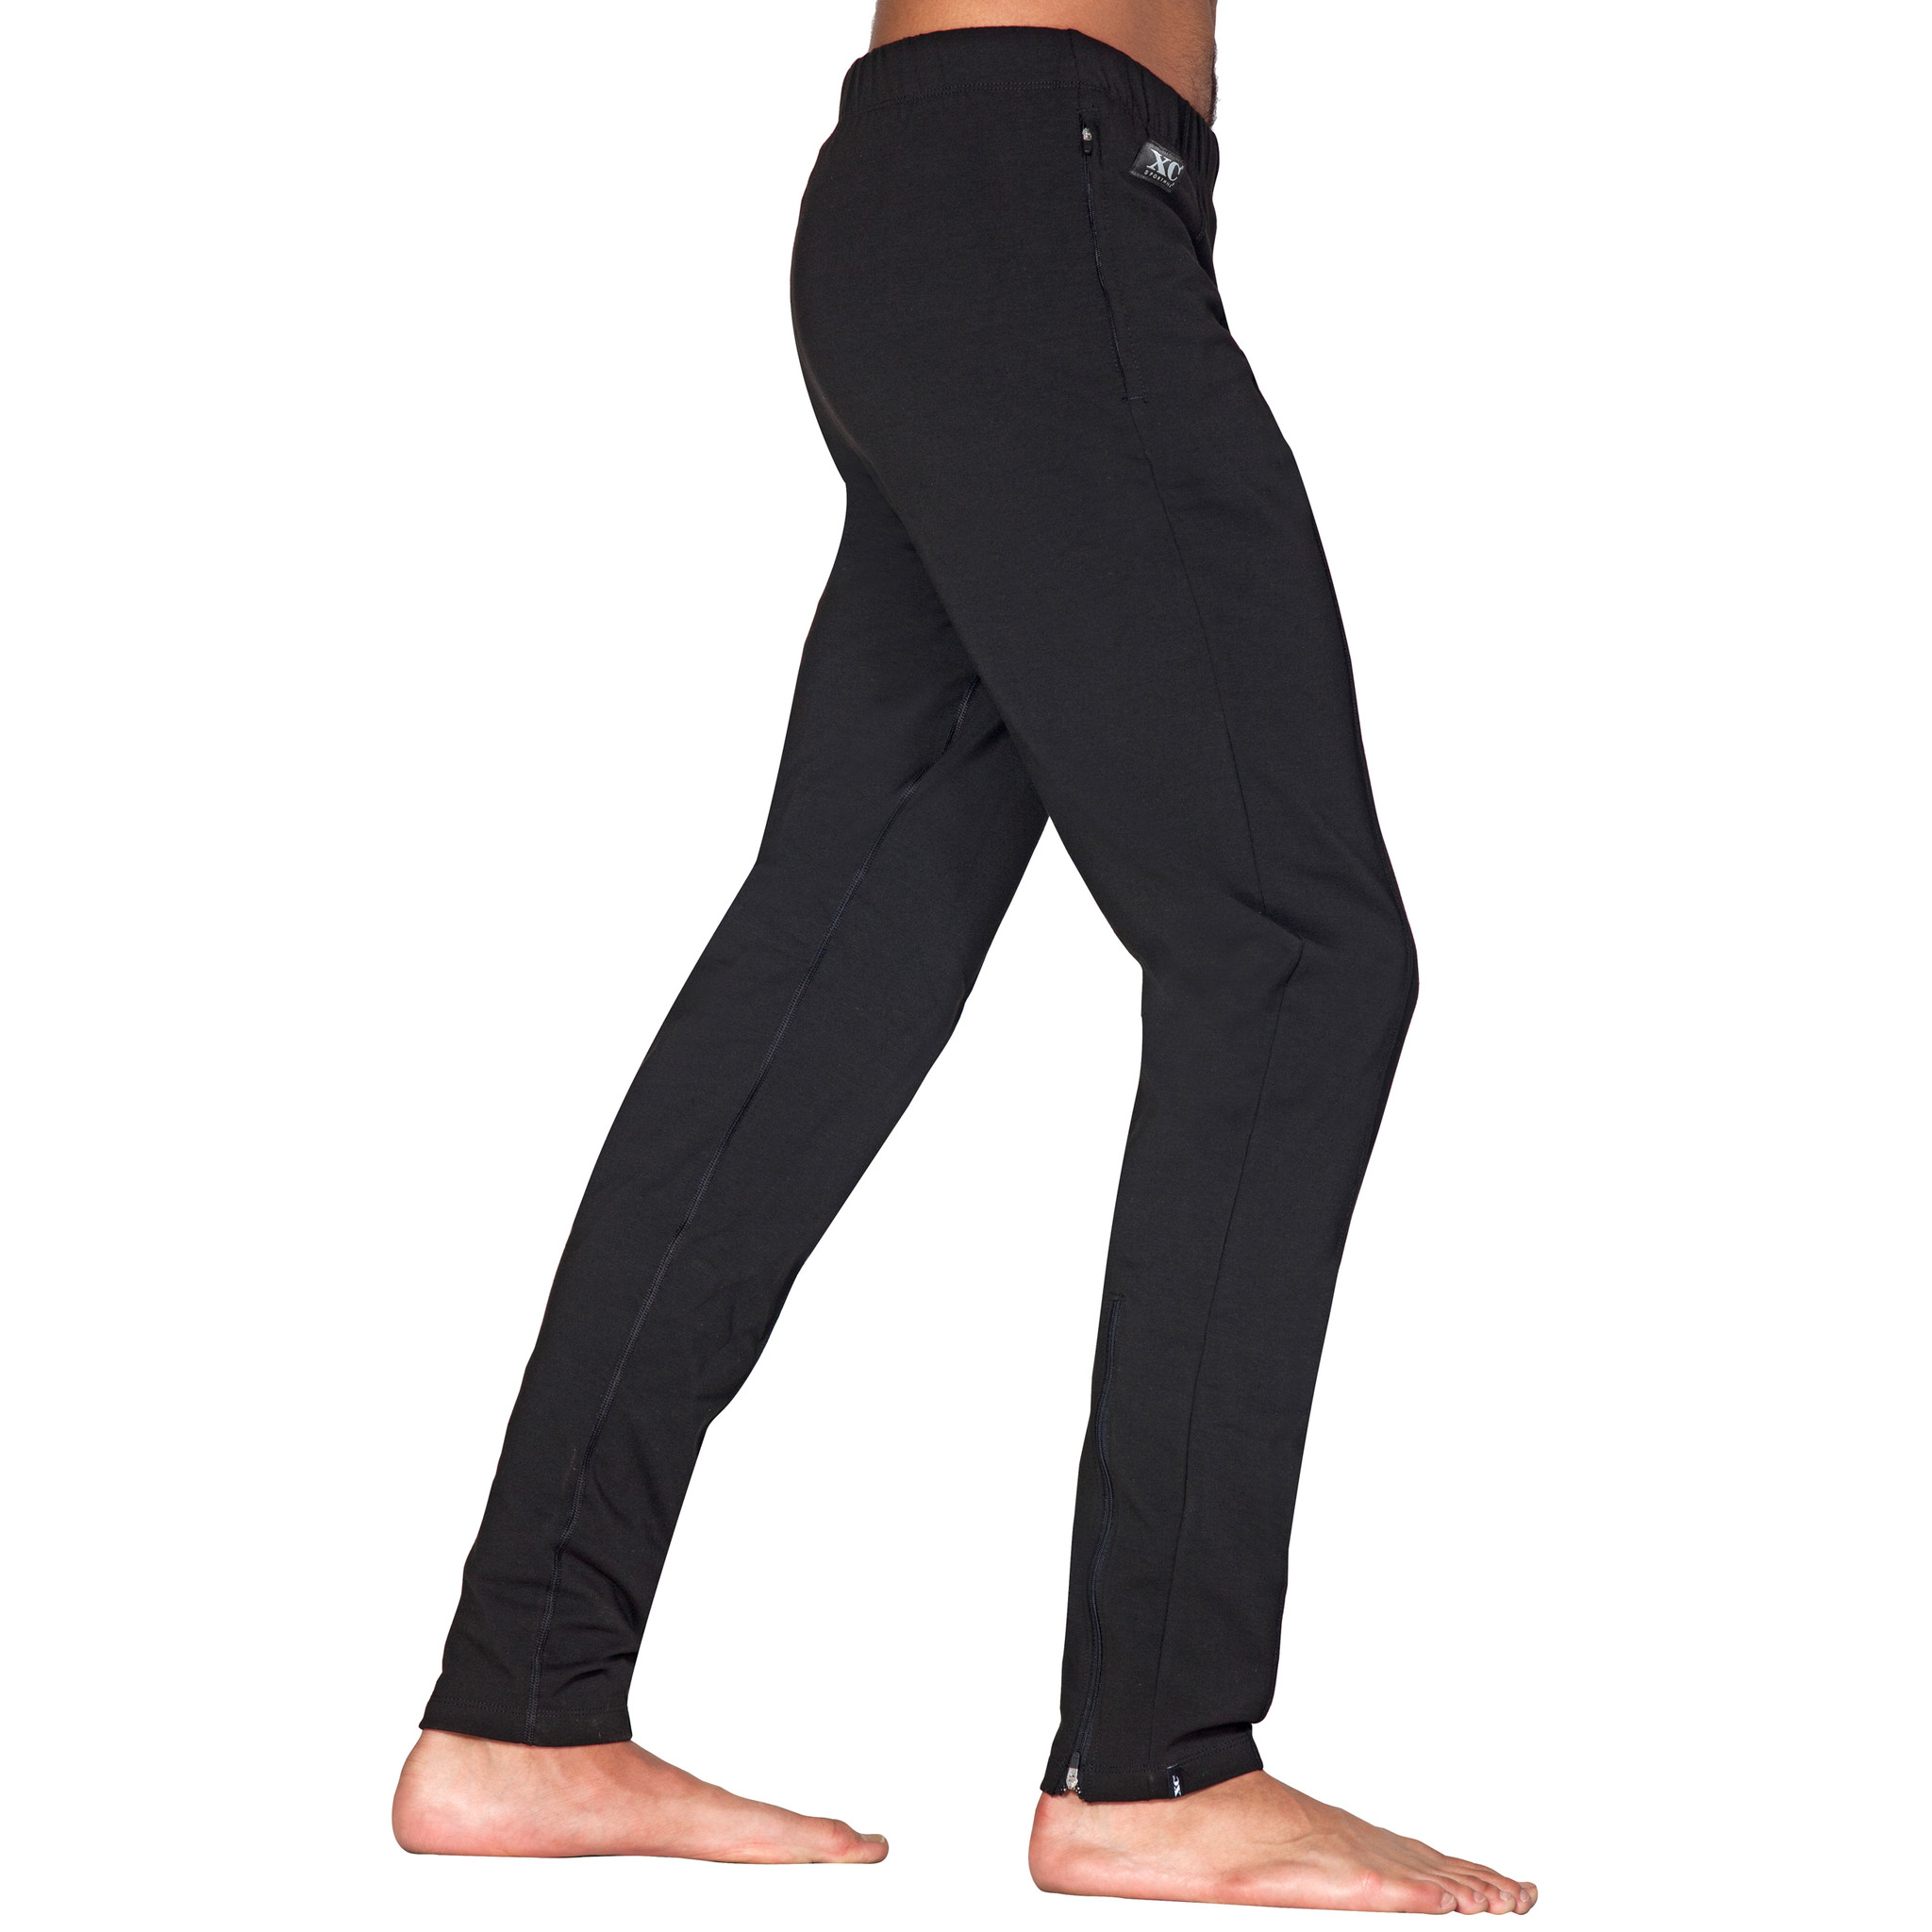 Lole Black Drawstring Tapered Leg Activewear Pants Women's Size Medium M